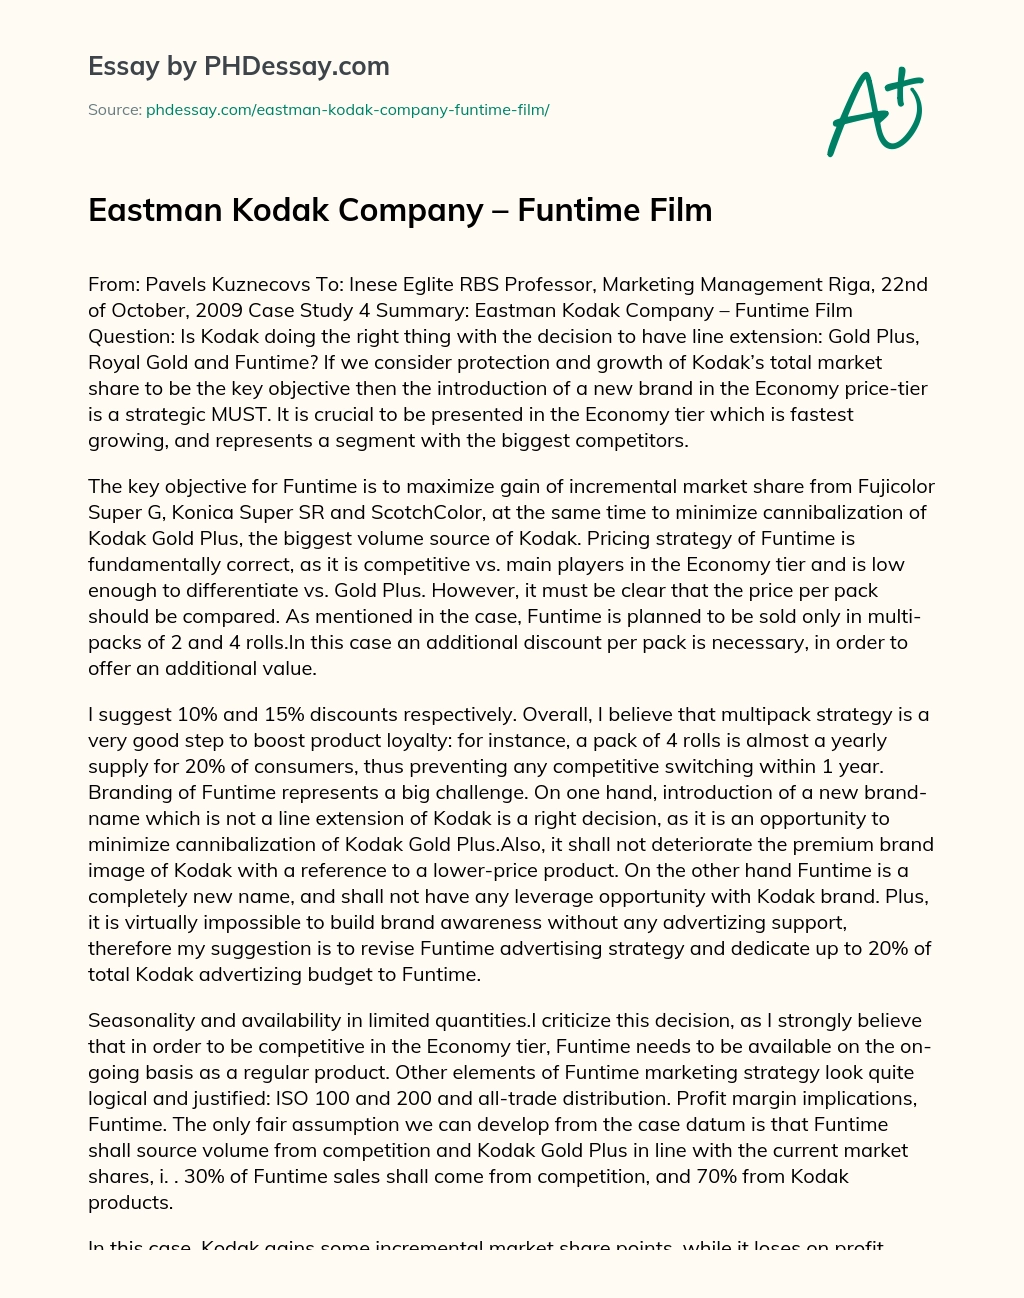 Eastman Kodak Company – Funtime Film essay